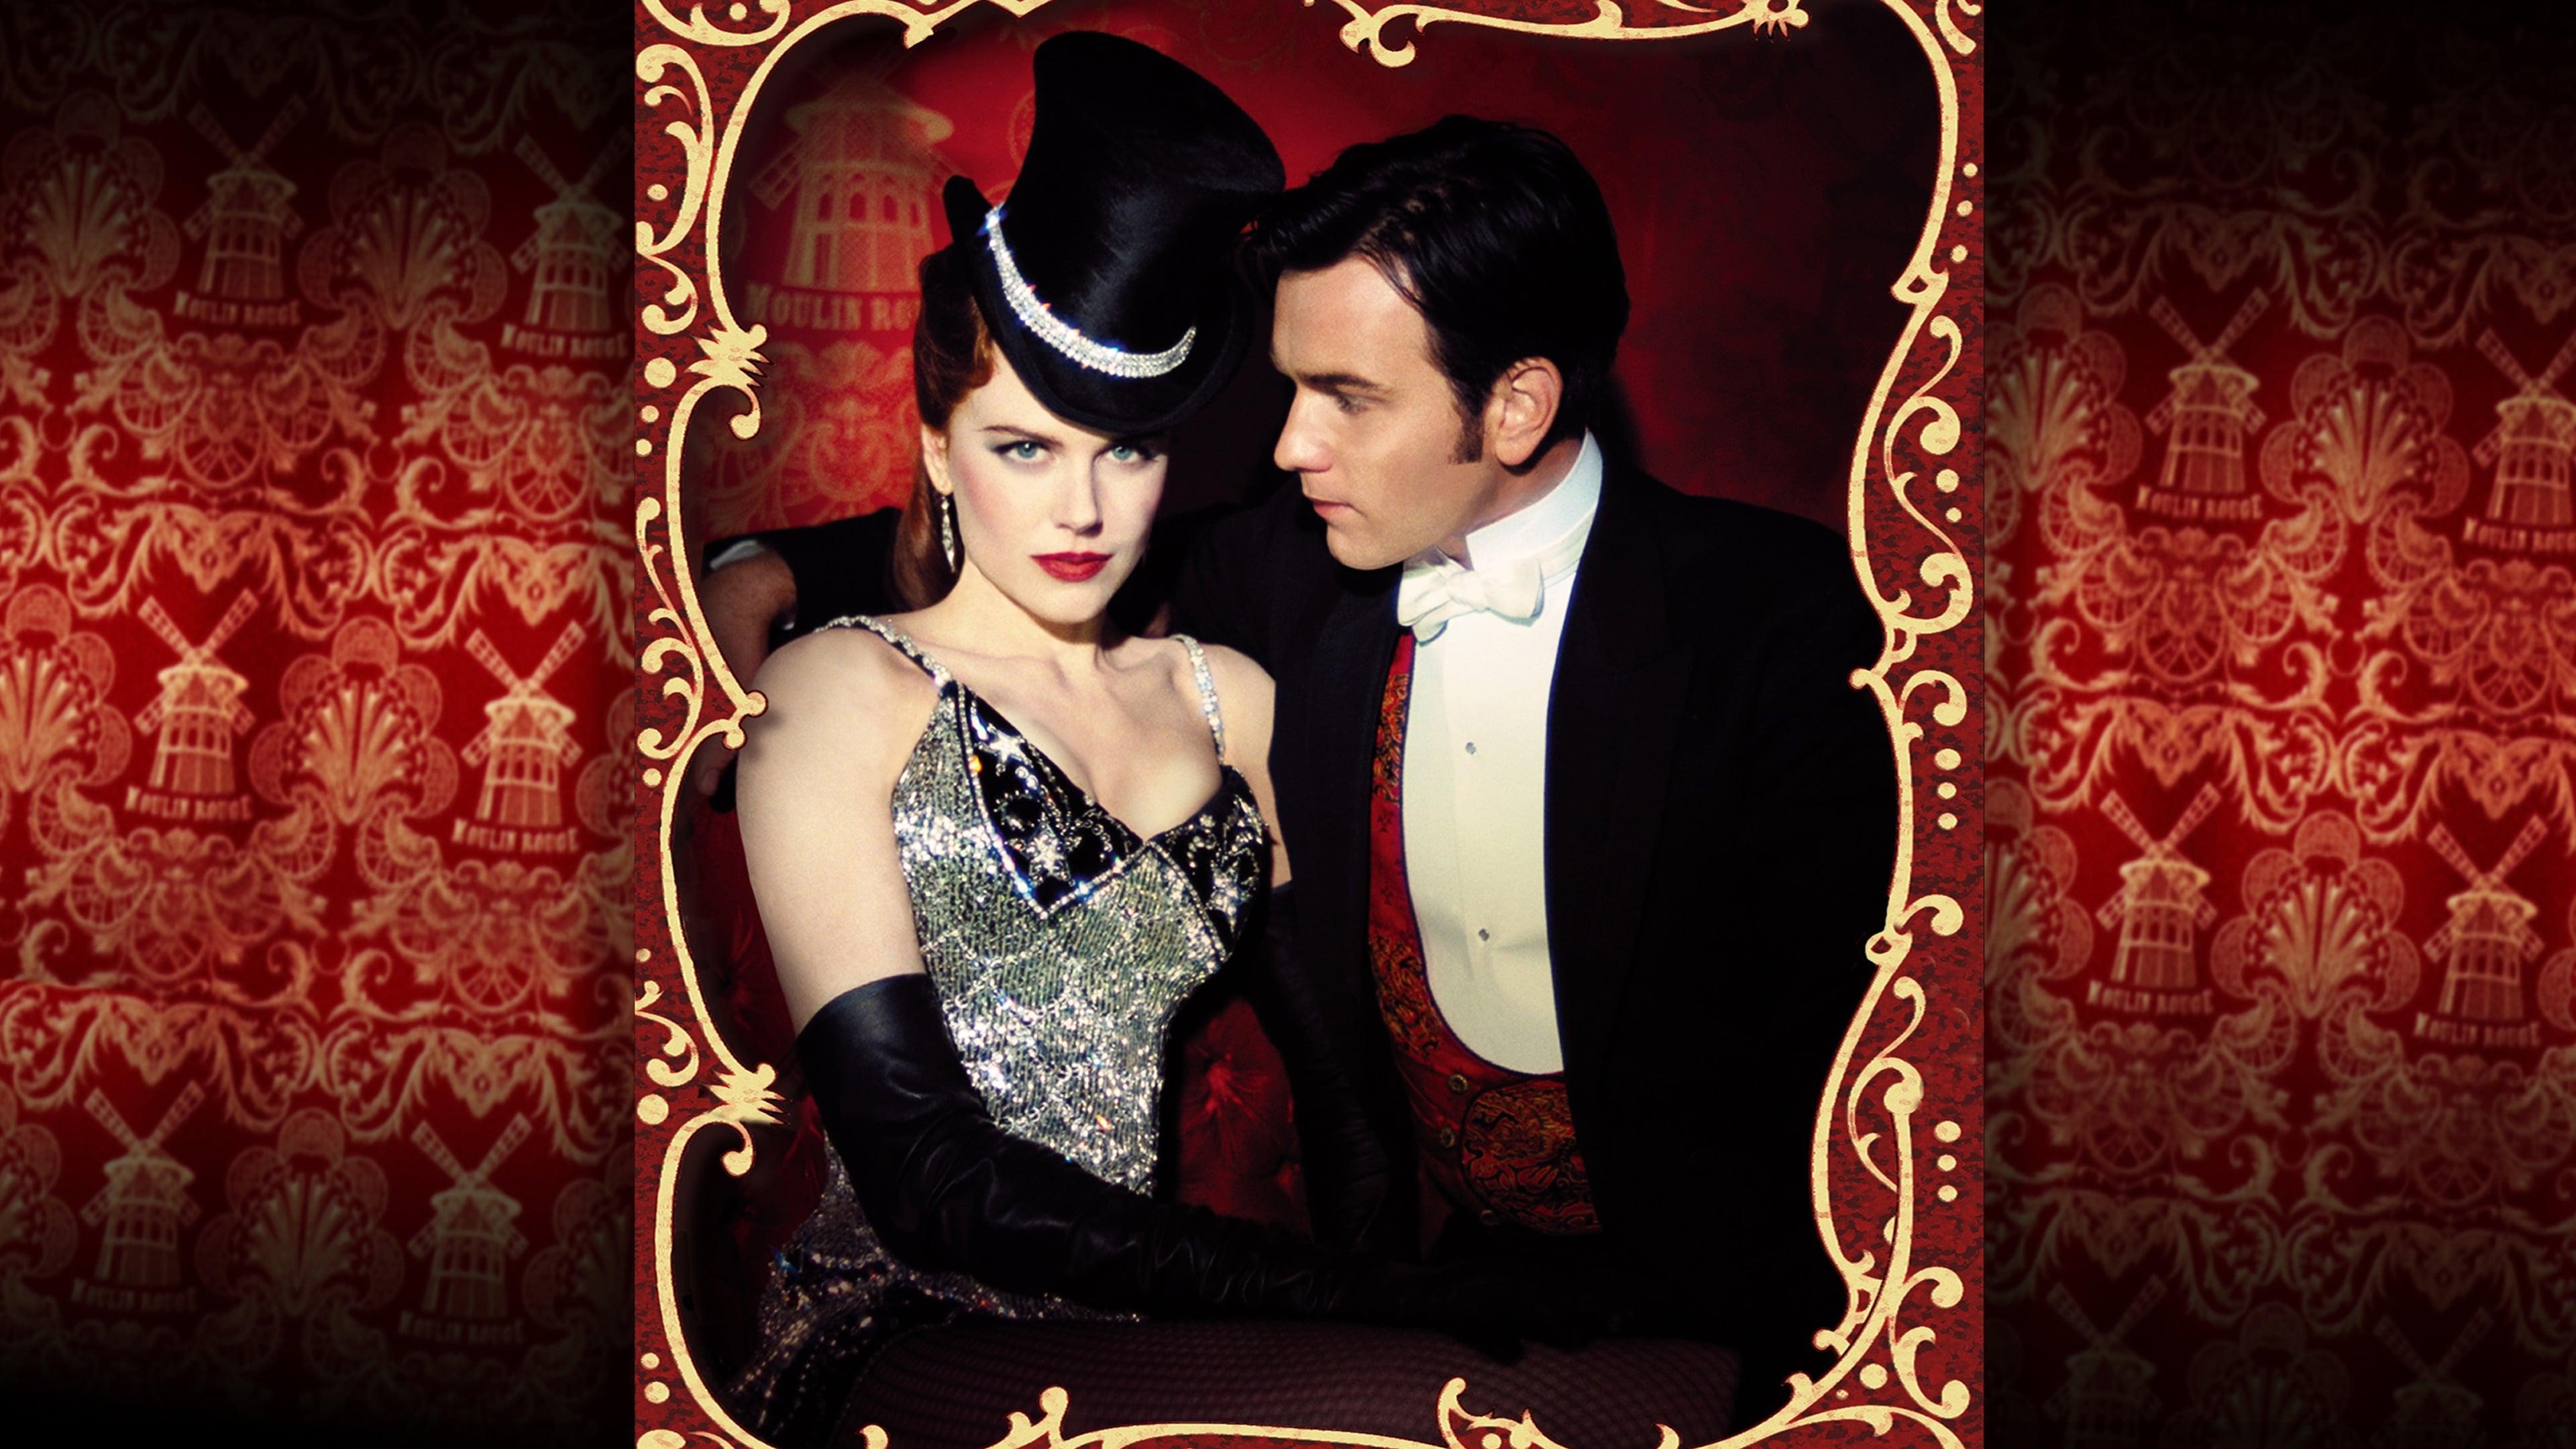 Moulin Rouge! backdrop